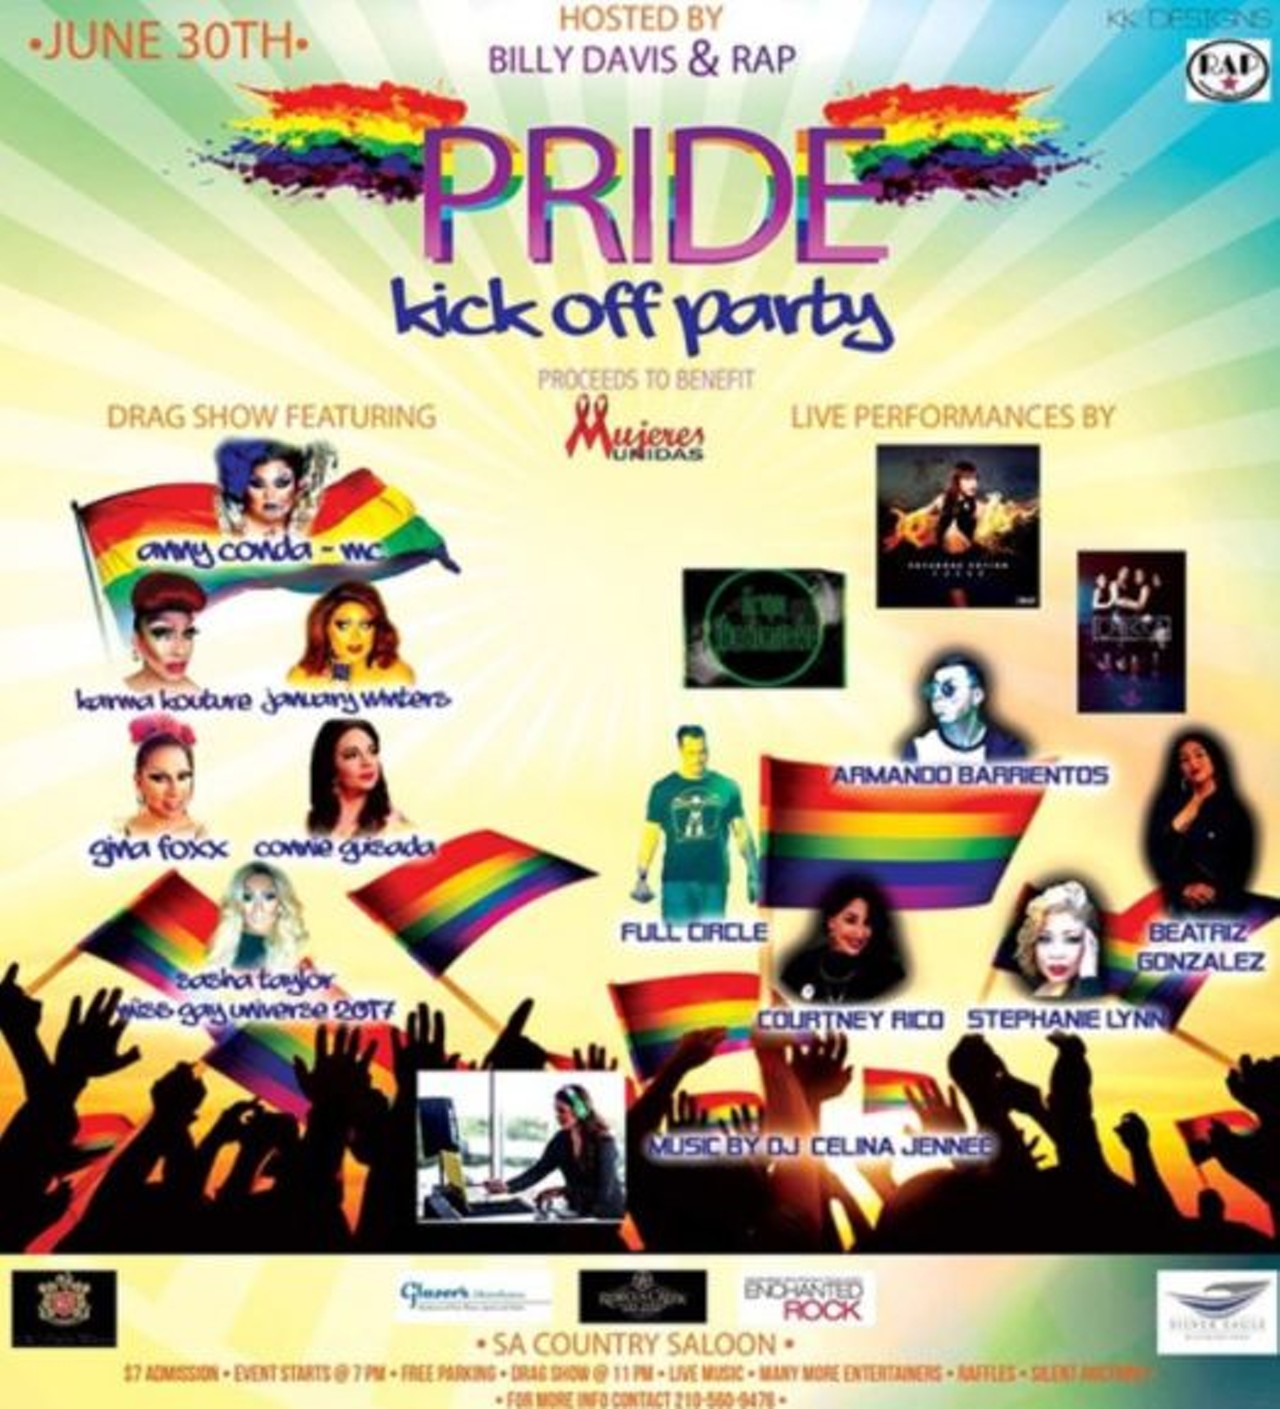 2017 San Antonio Pride Kick-Off Party
Fri., June 30, 7 p.m.-2 a.m. $7.